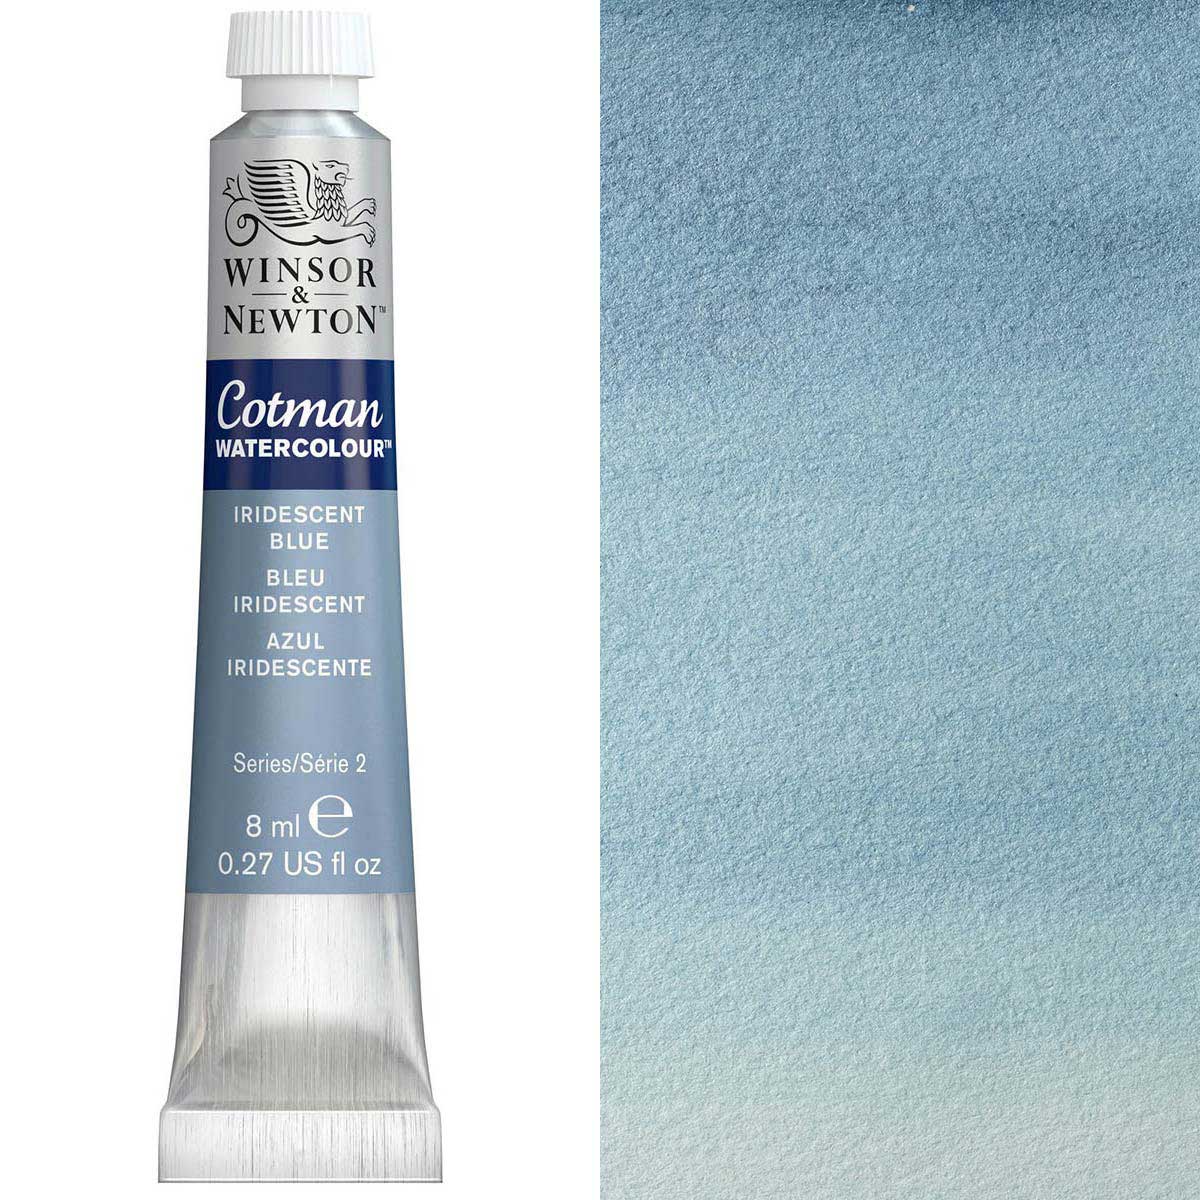 Winsor and Newton - Cotman Watercolour - 8ml - Iridescent Blue